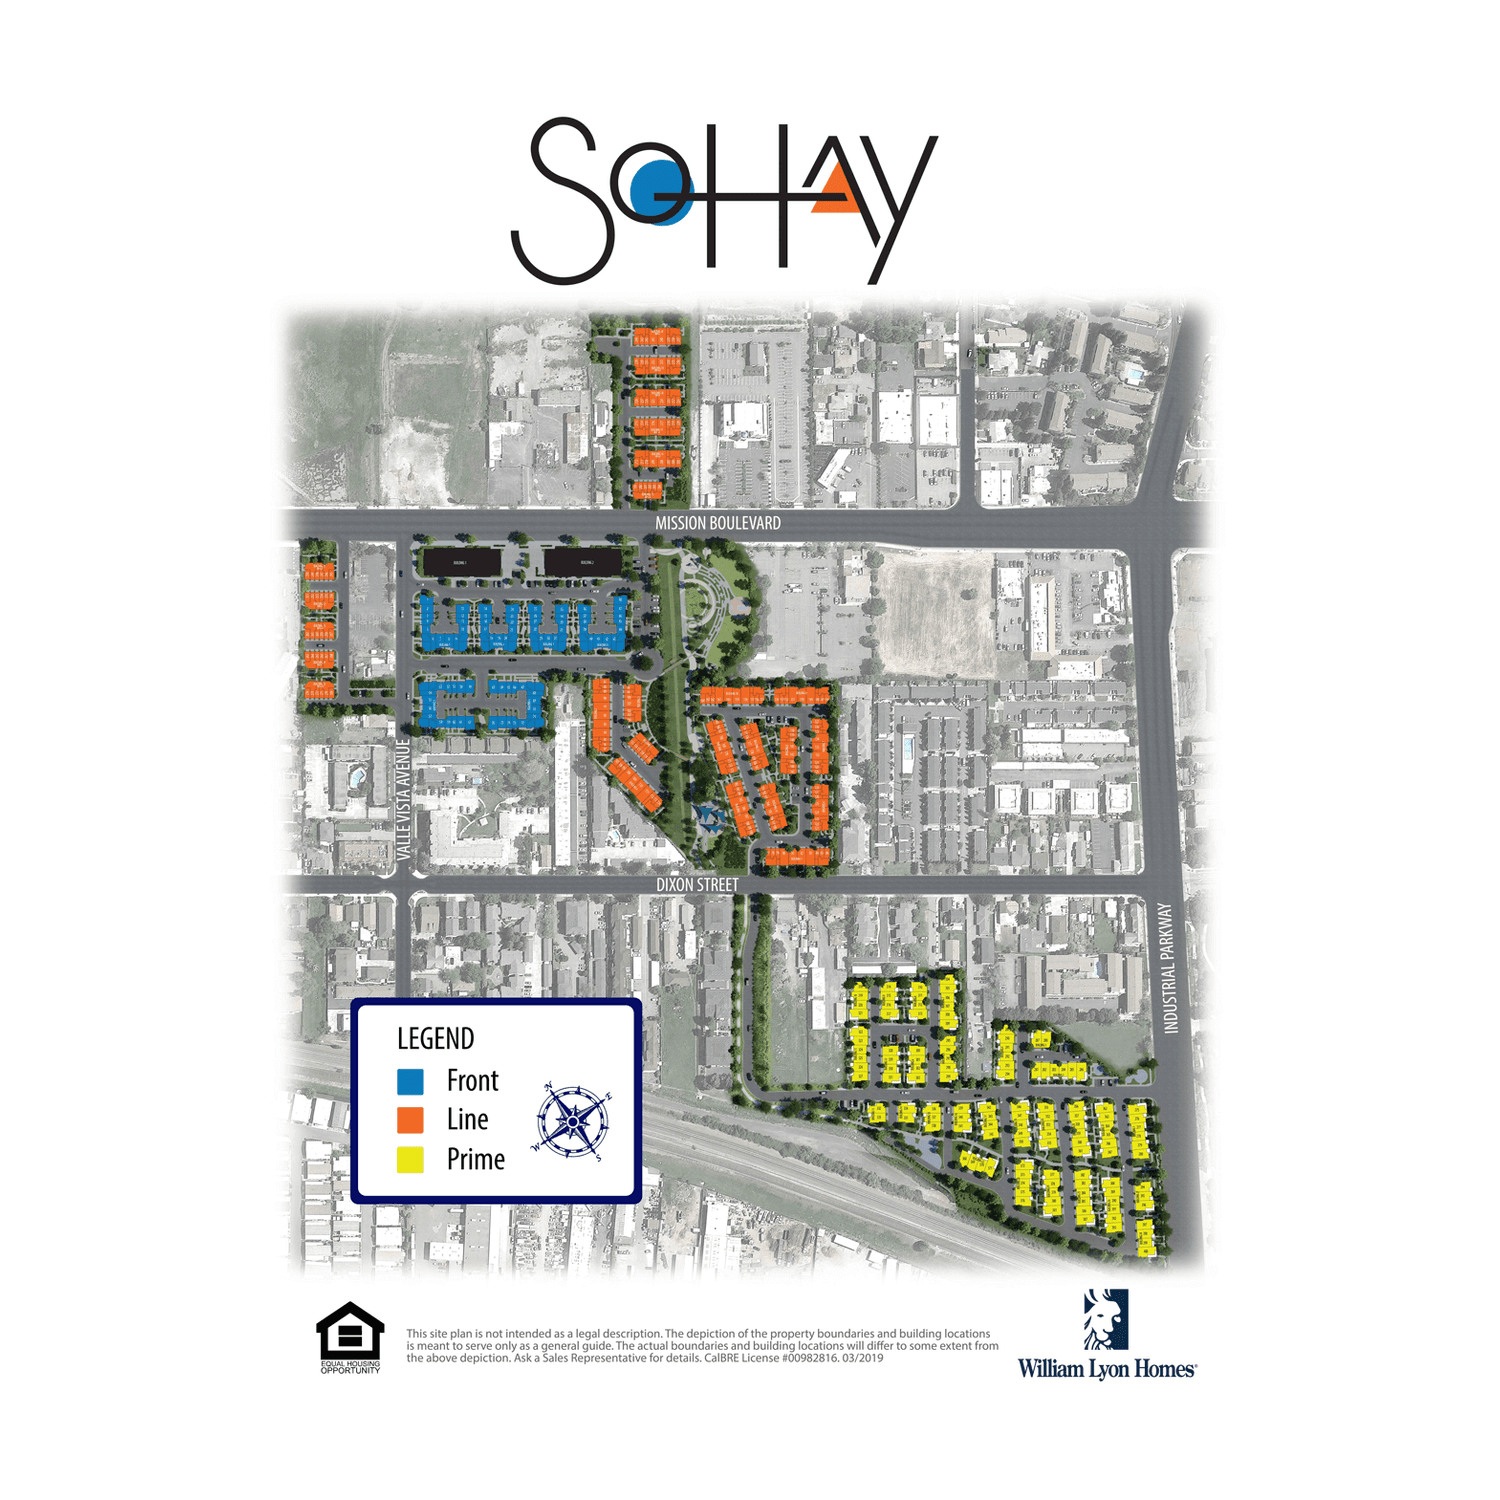 2. SoHay Prime建于 132 Nexa Court, 海沃德, CA 94544